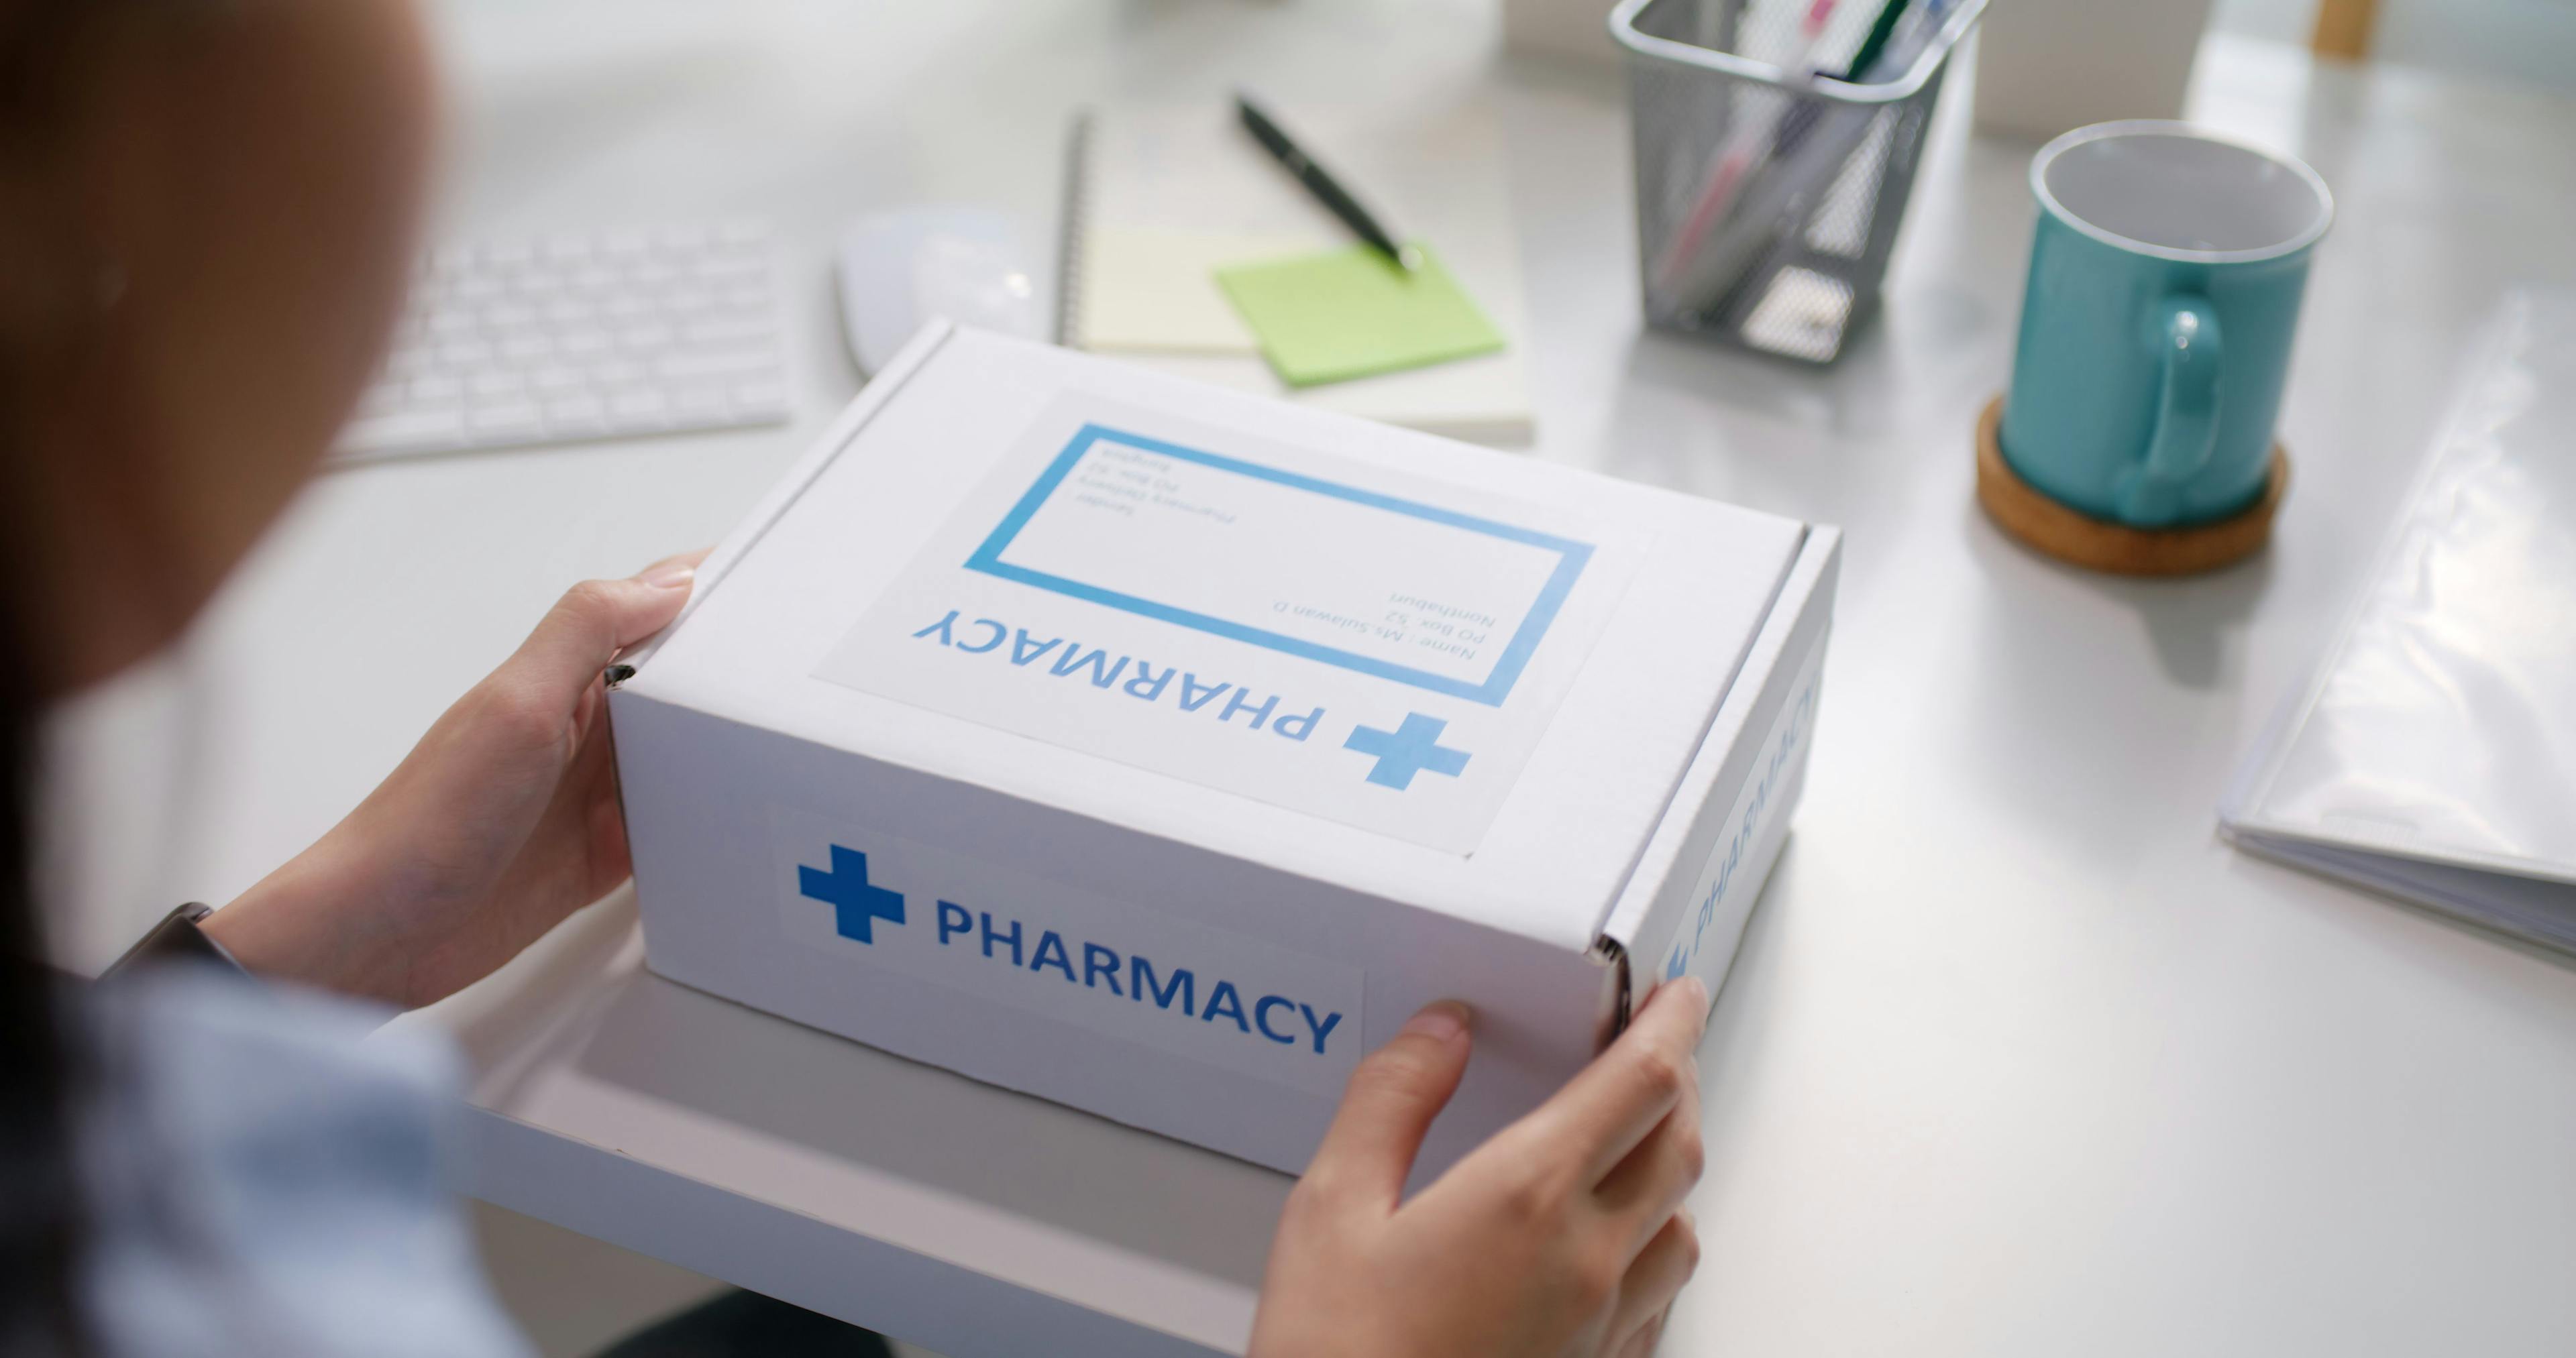 Box of Mailed Prescriptions | Image credit: ChayTee - stock.adobe.com